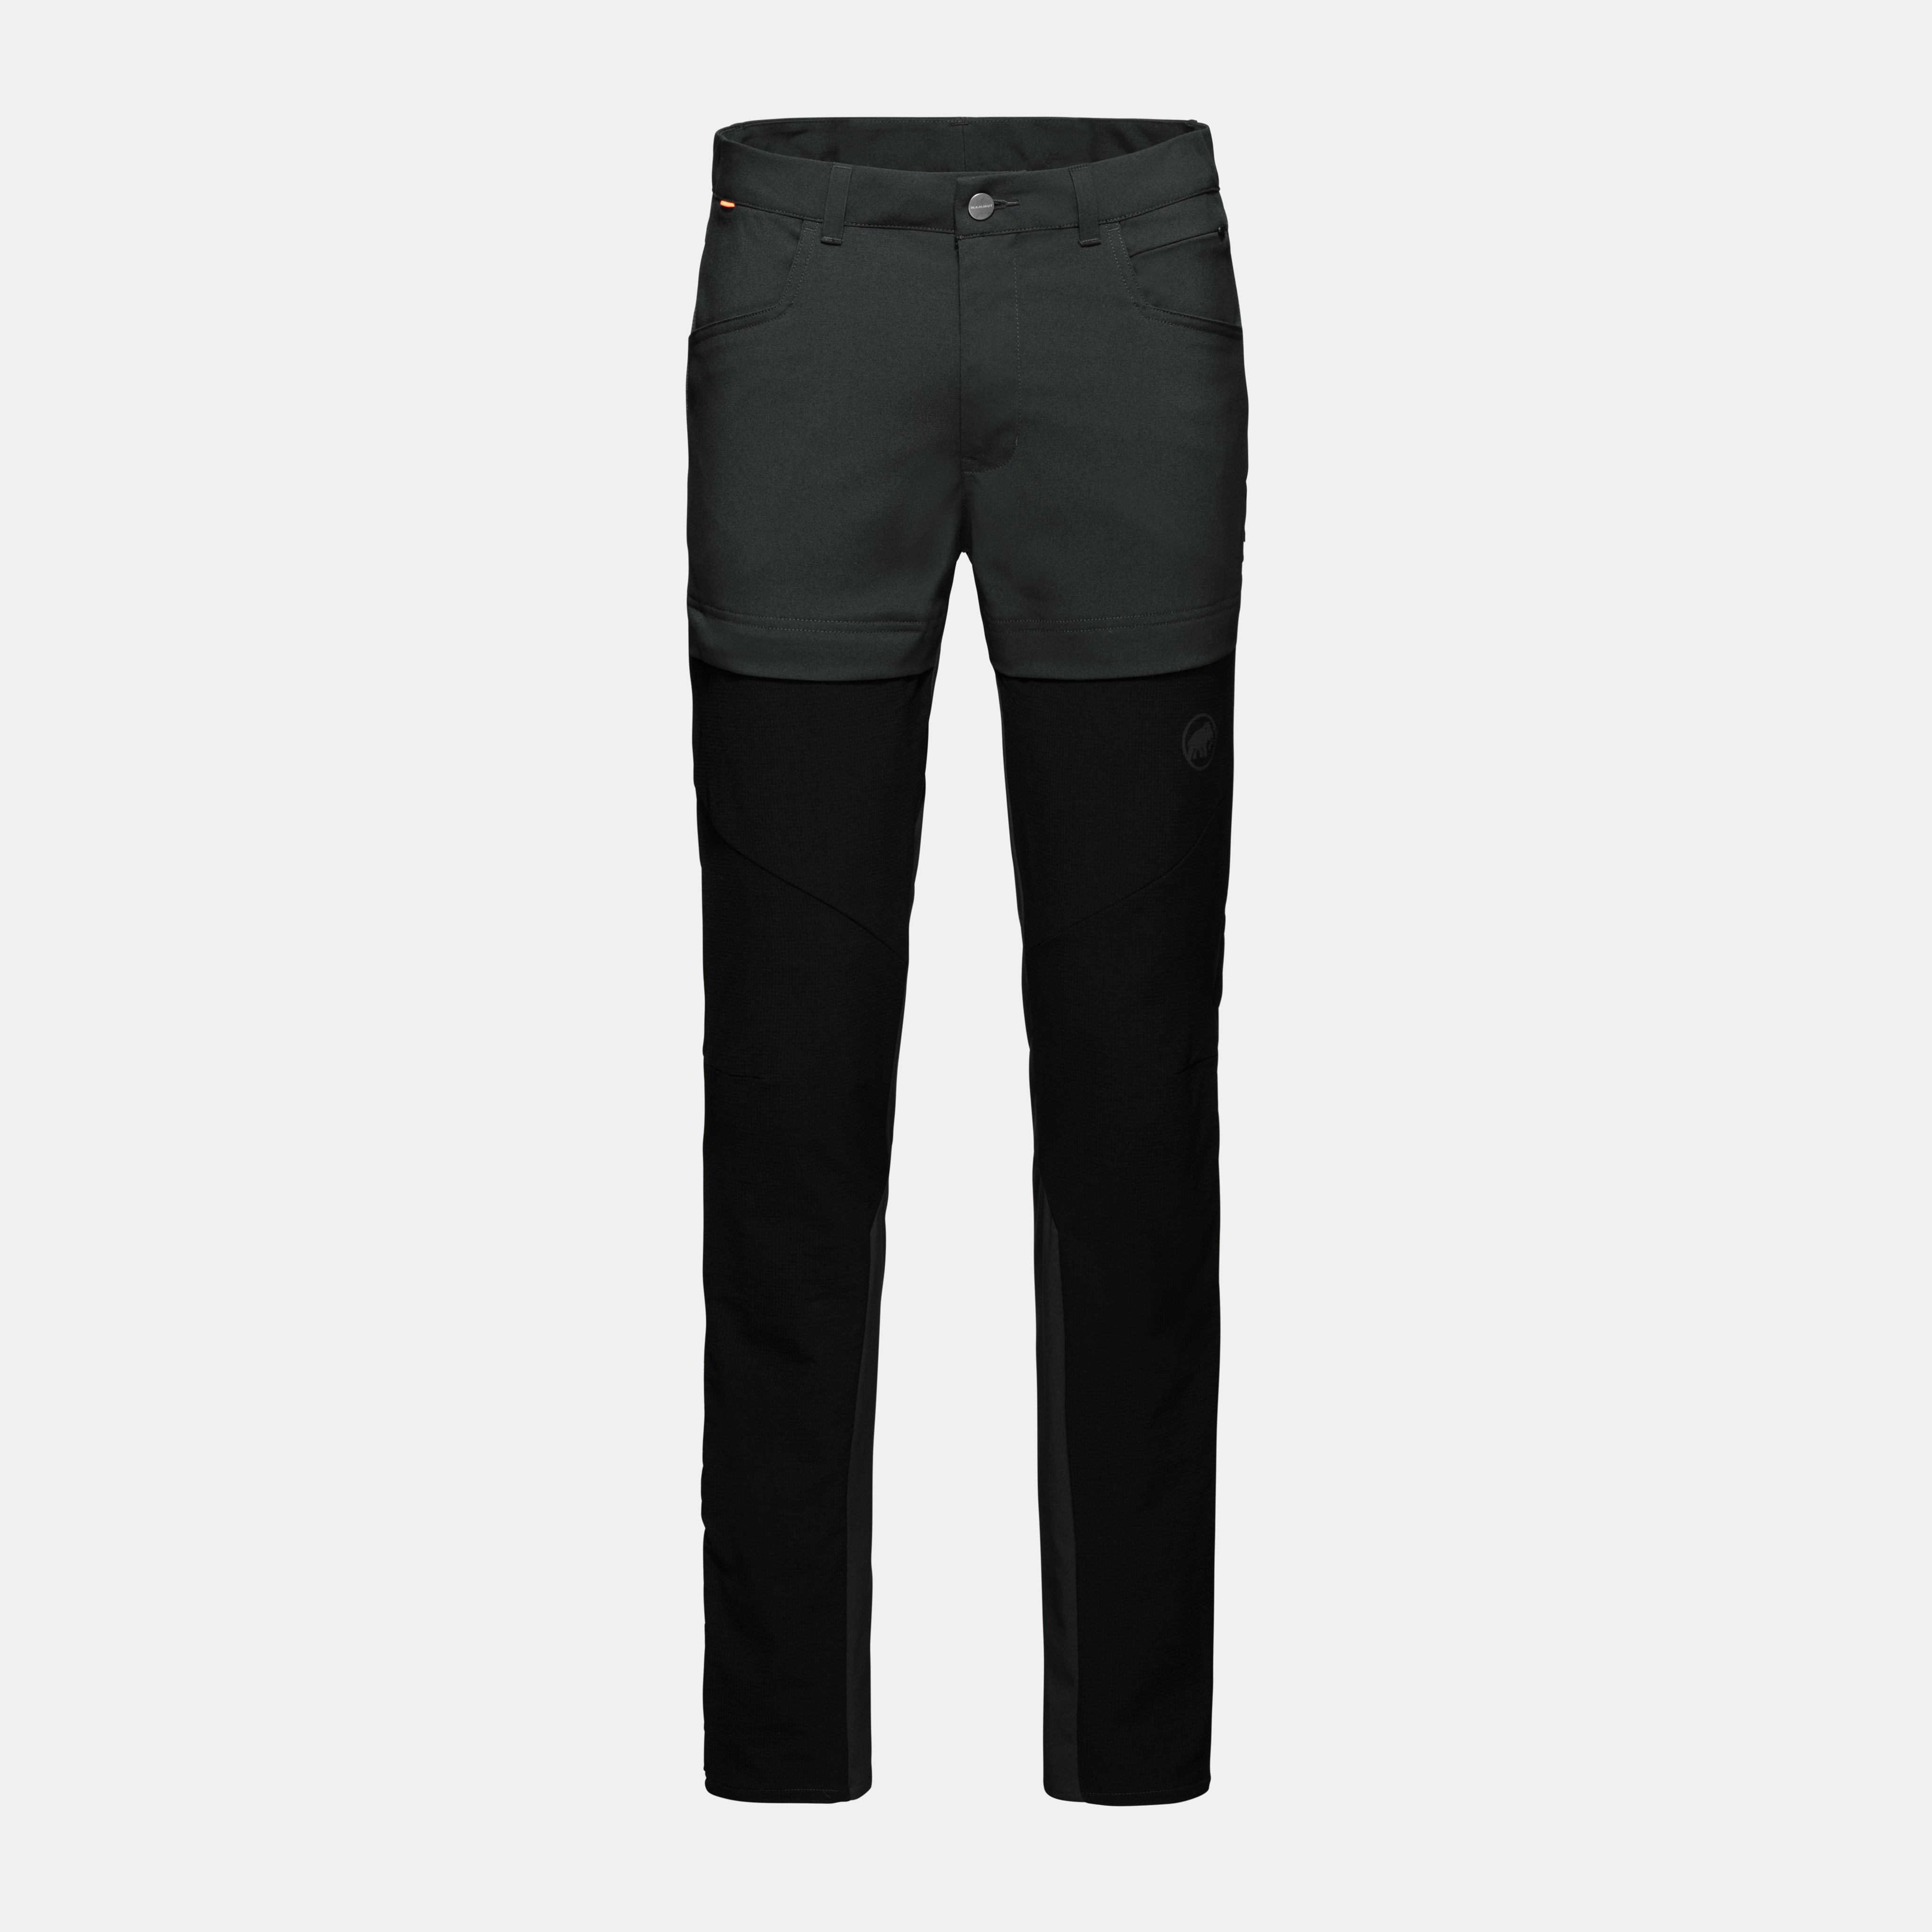 Zinal Guide Pants Men product image